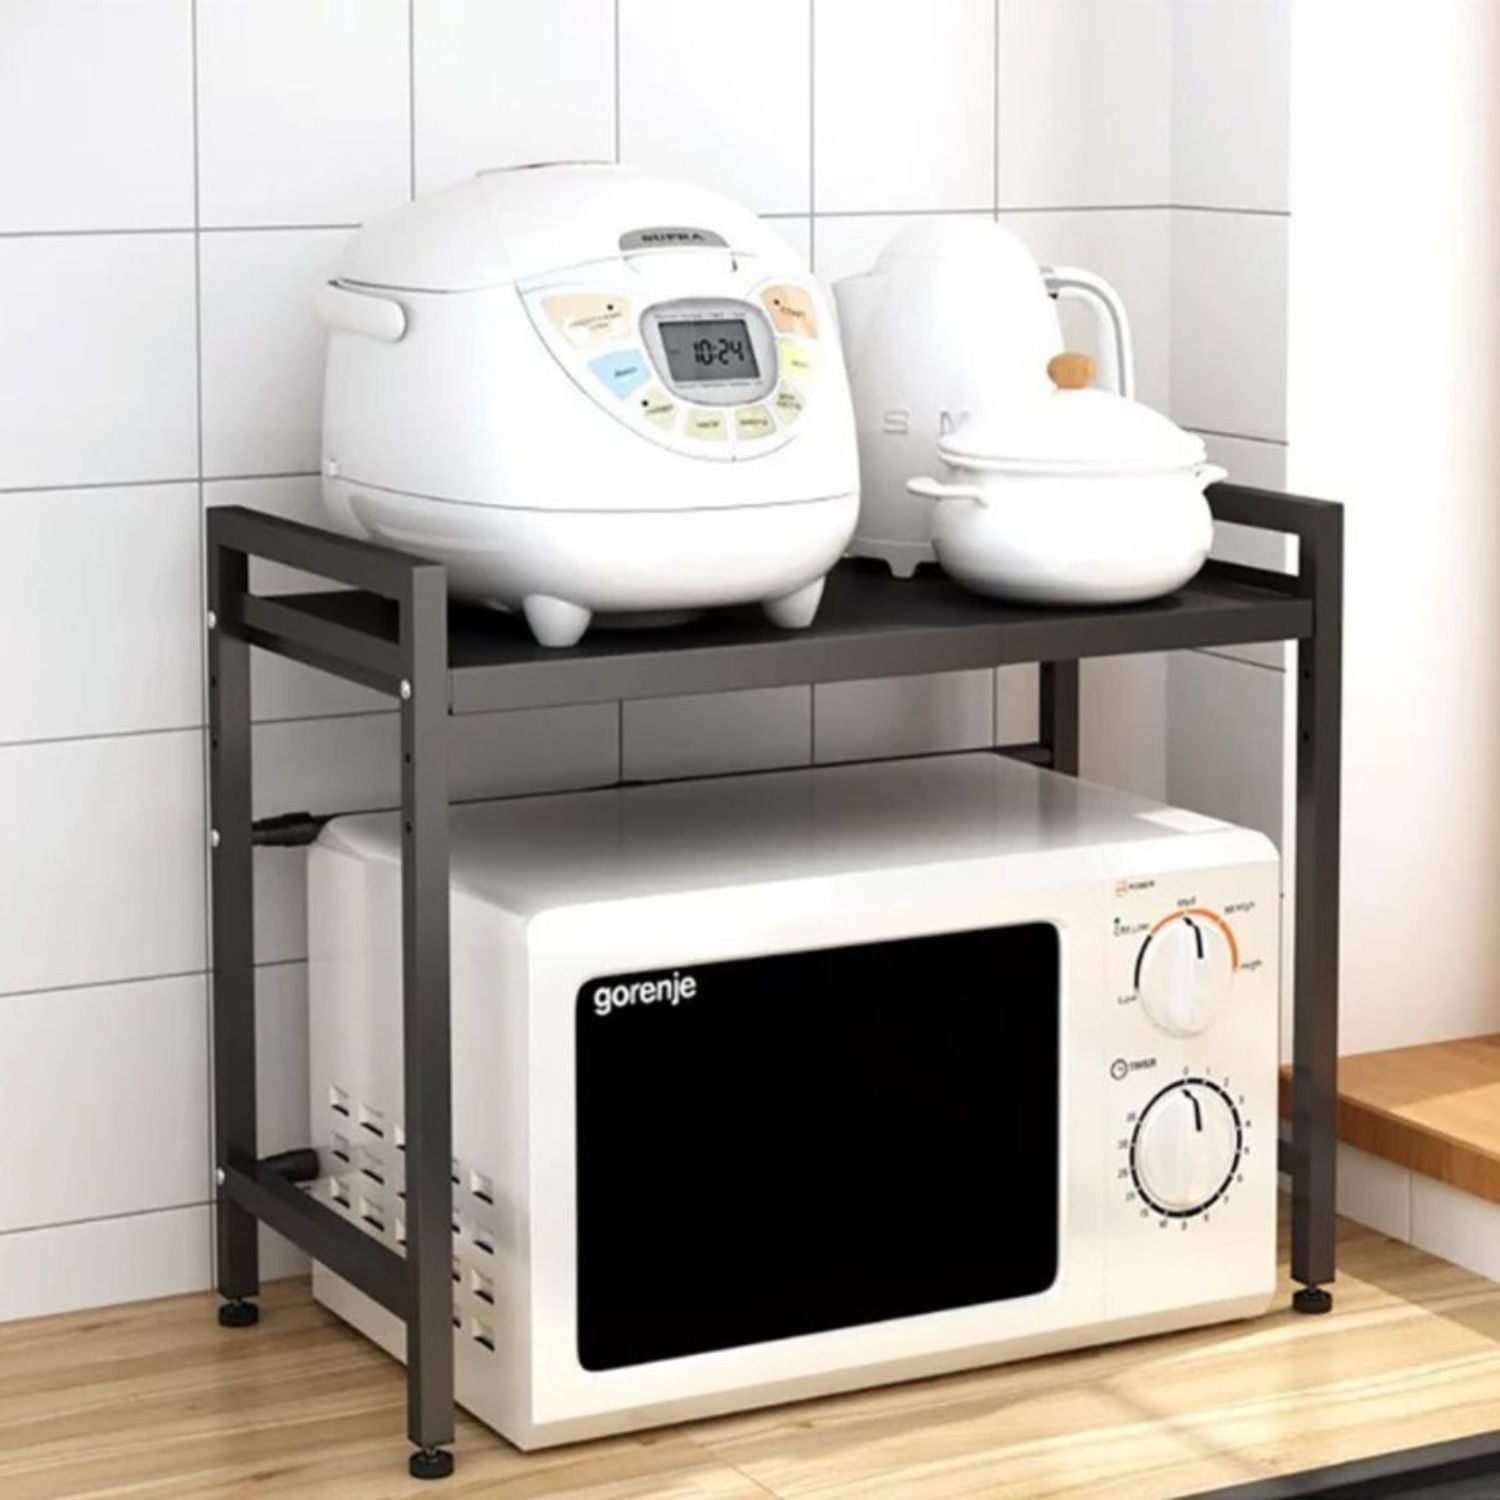 GOMINIMO Microwave Oven Rack 1 Tier